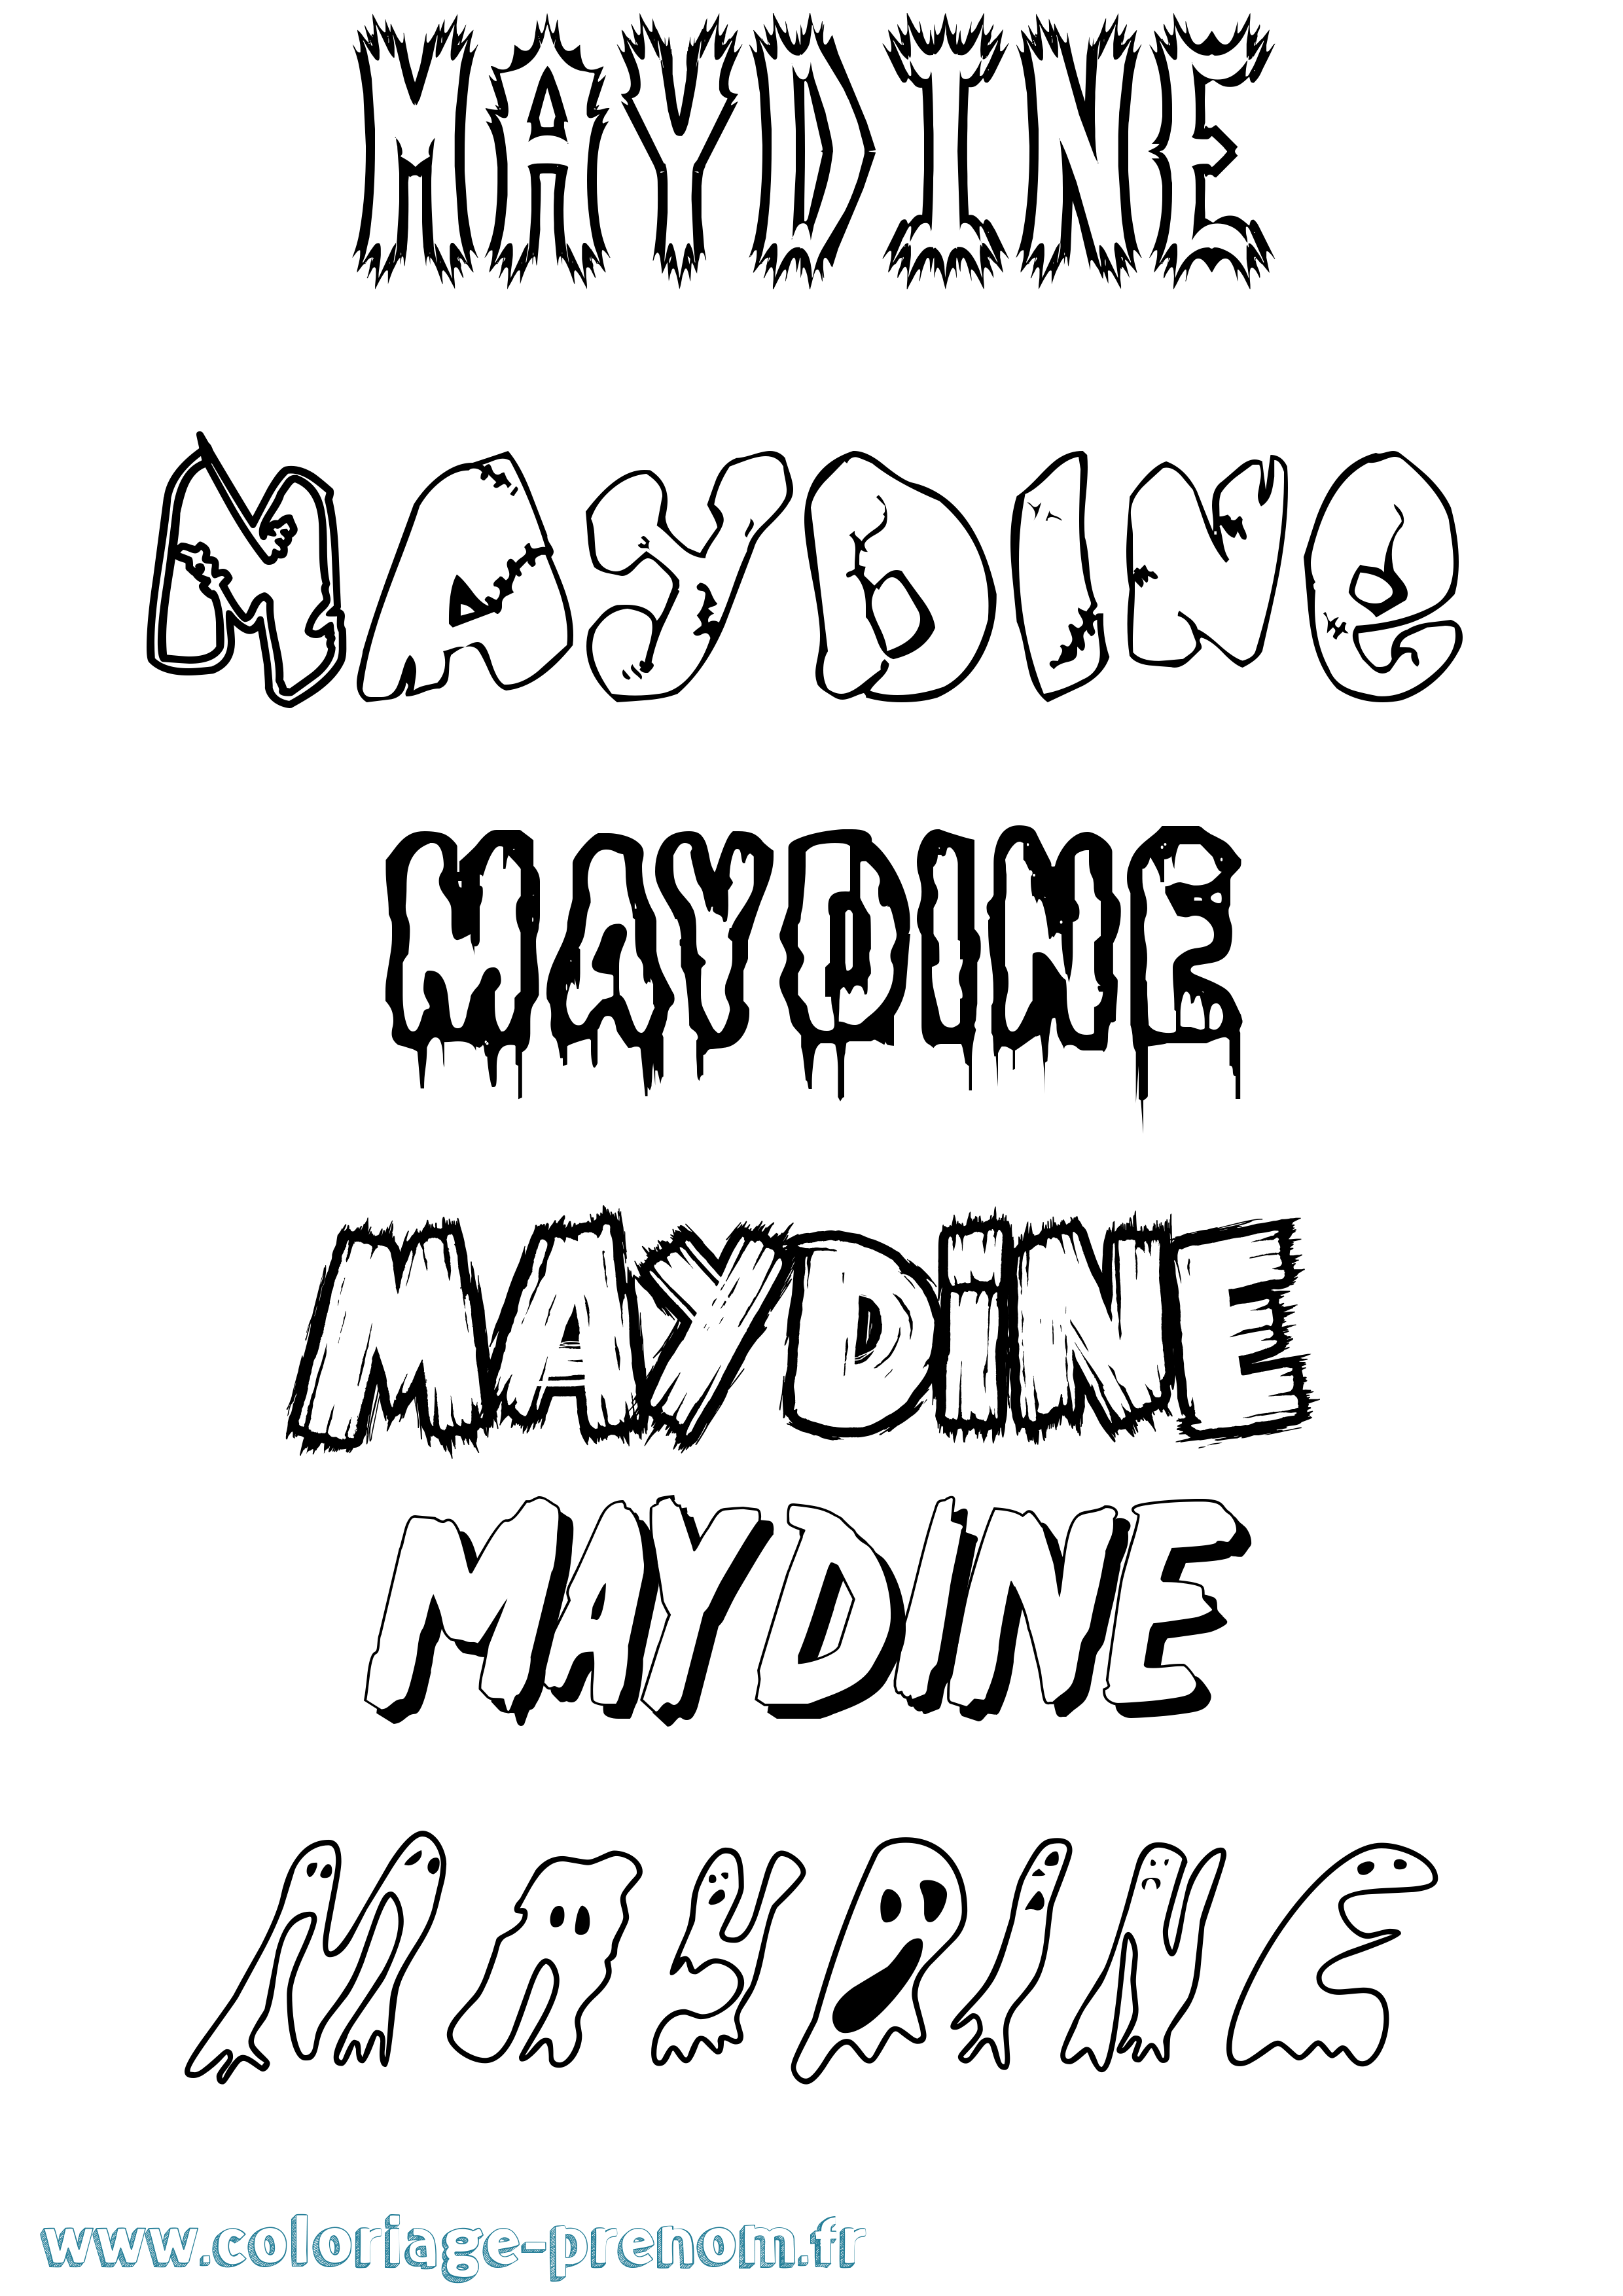 Coloriage prénom Maydine Frisson